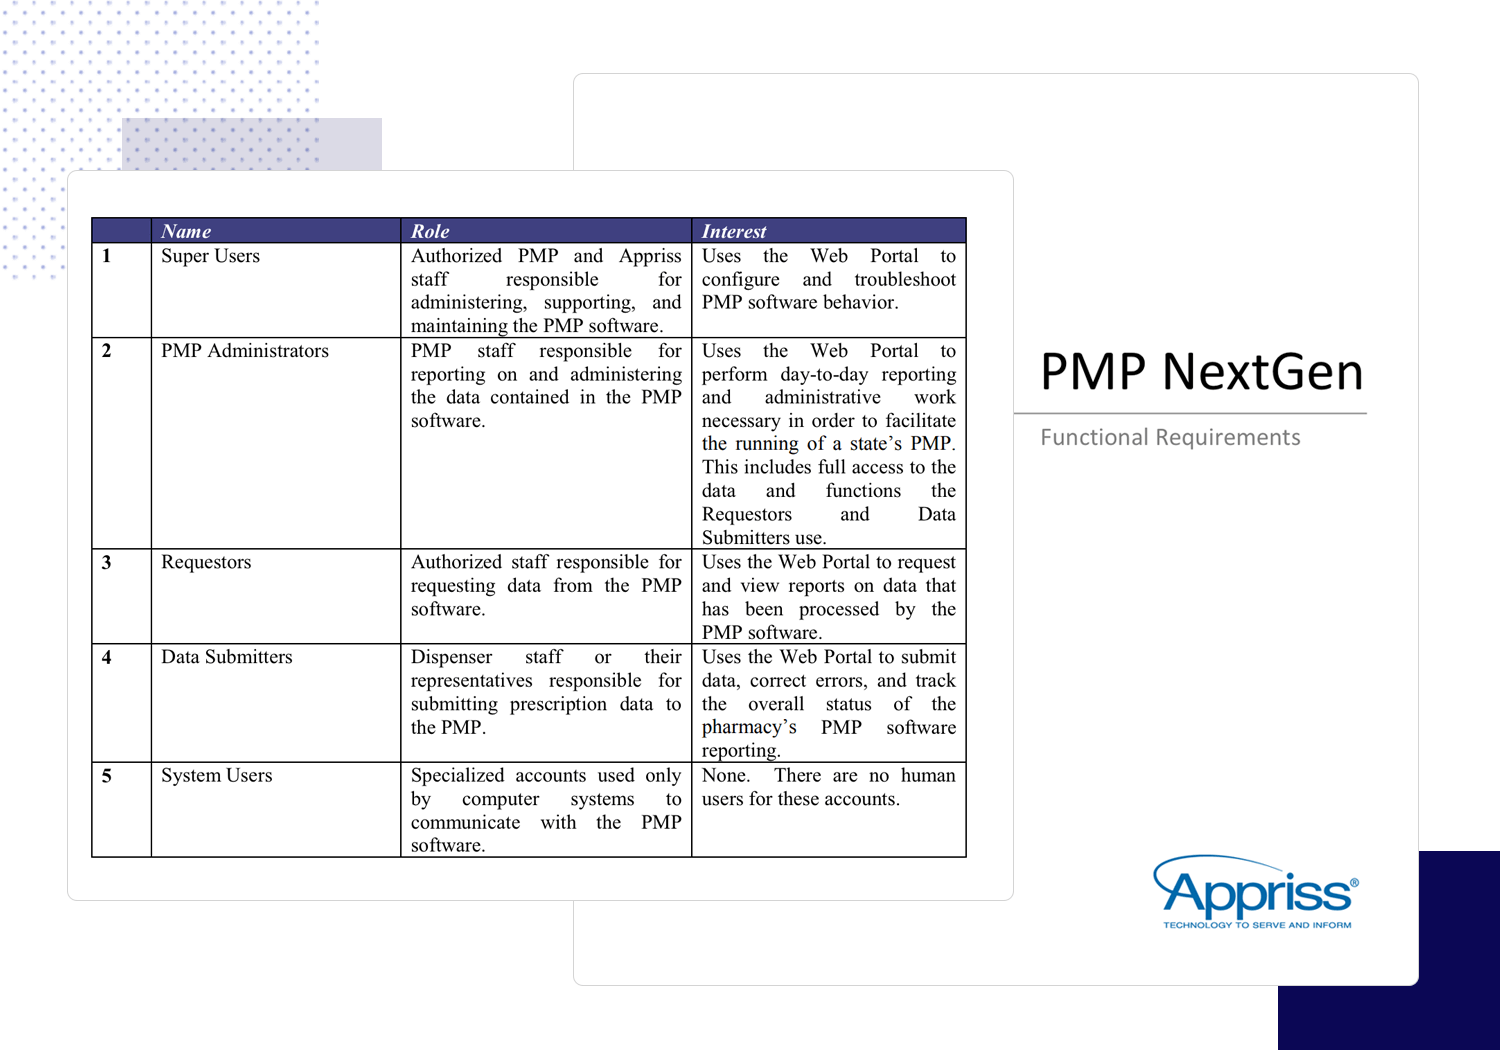 Functional specification document - PMP NextGen